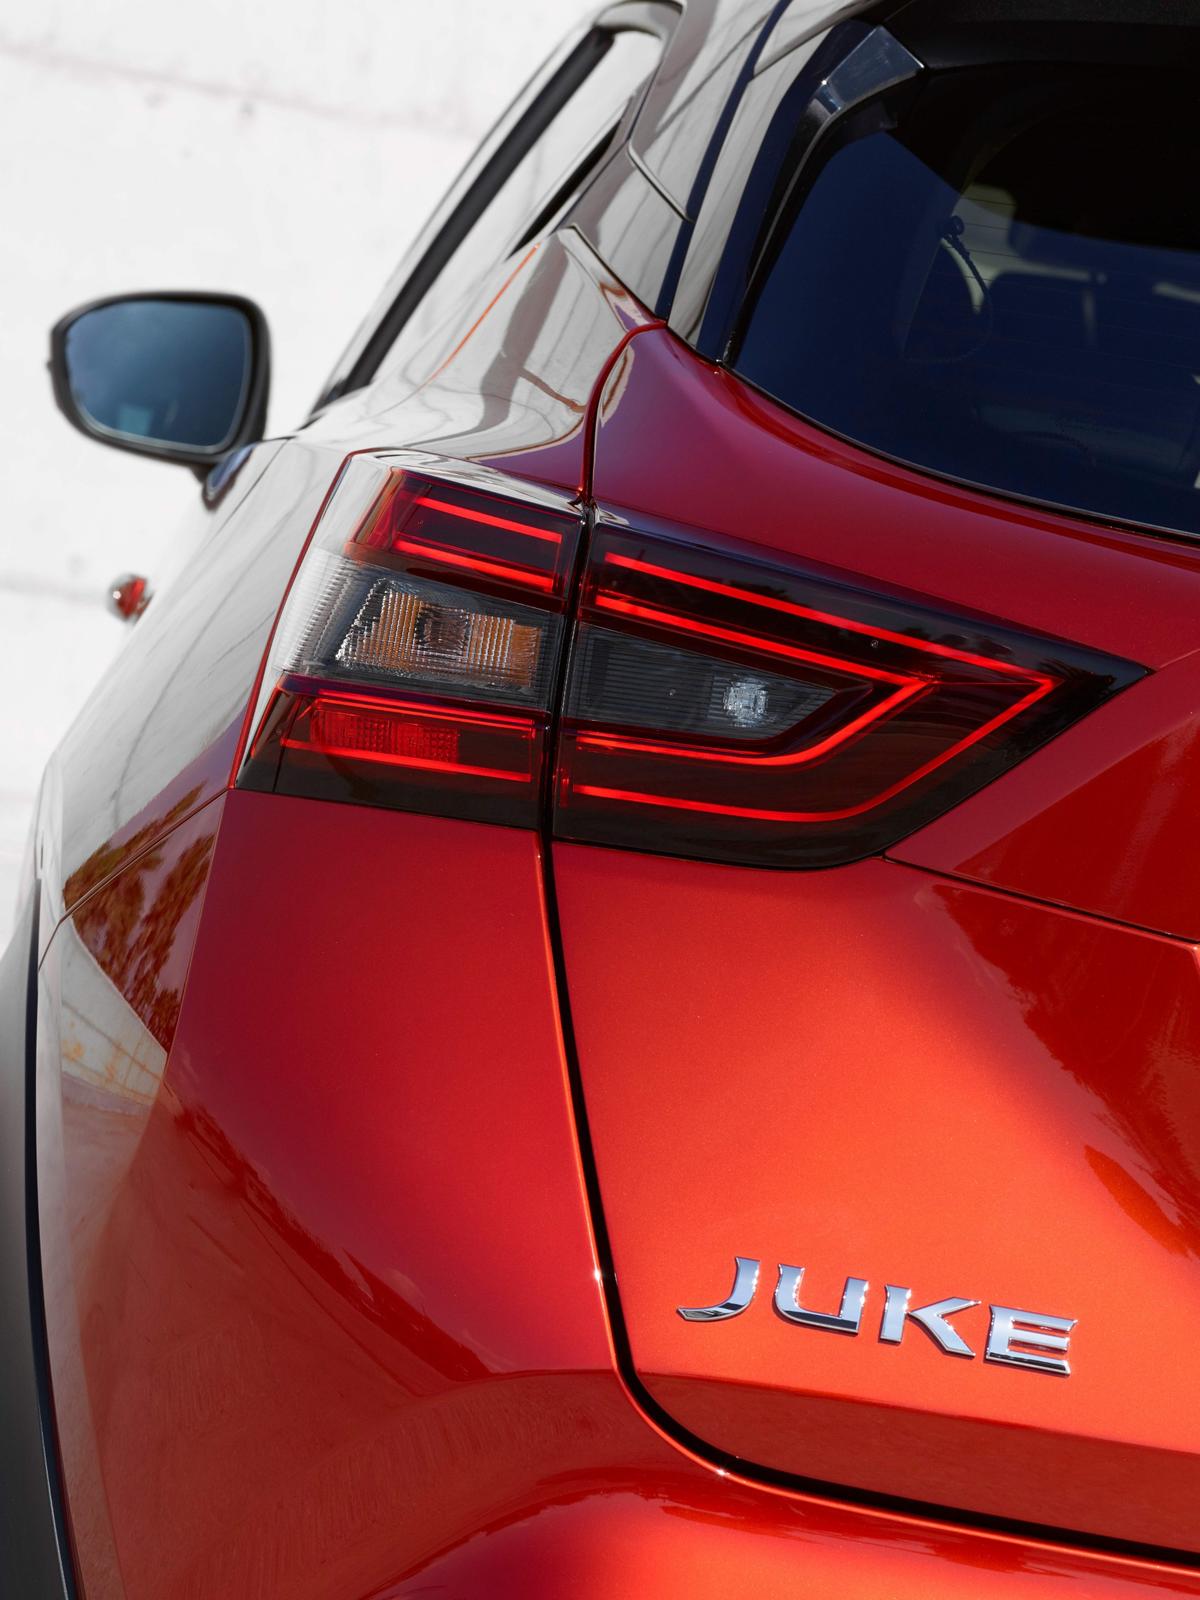 Oct. 7 – 2pm CET – New Nissan JUKE Details 05-2830×3774-2122×2829